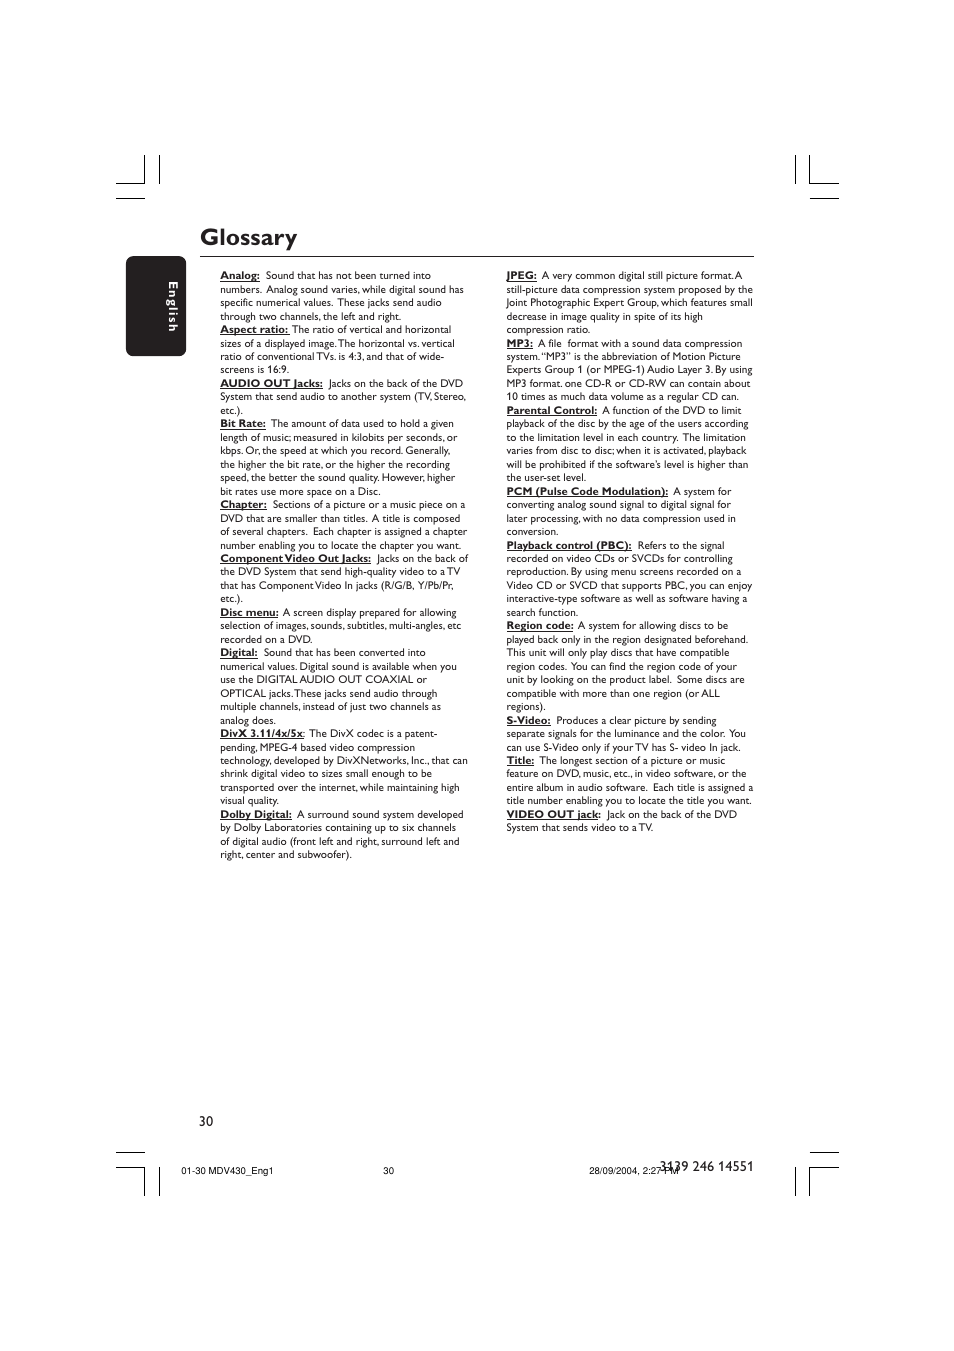 Glossary | Philips Magnavox MDV430 User Manual | Page 30 / 30